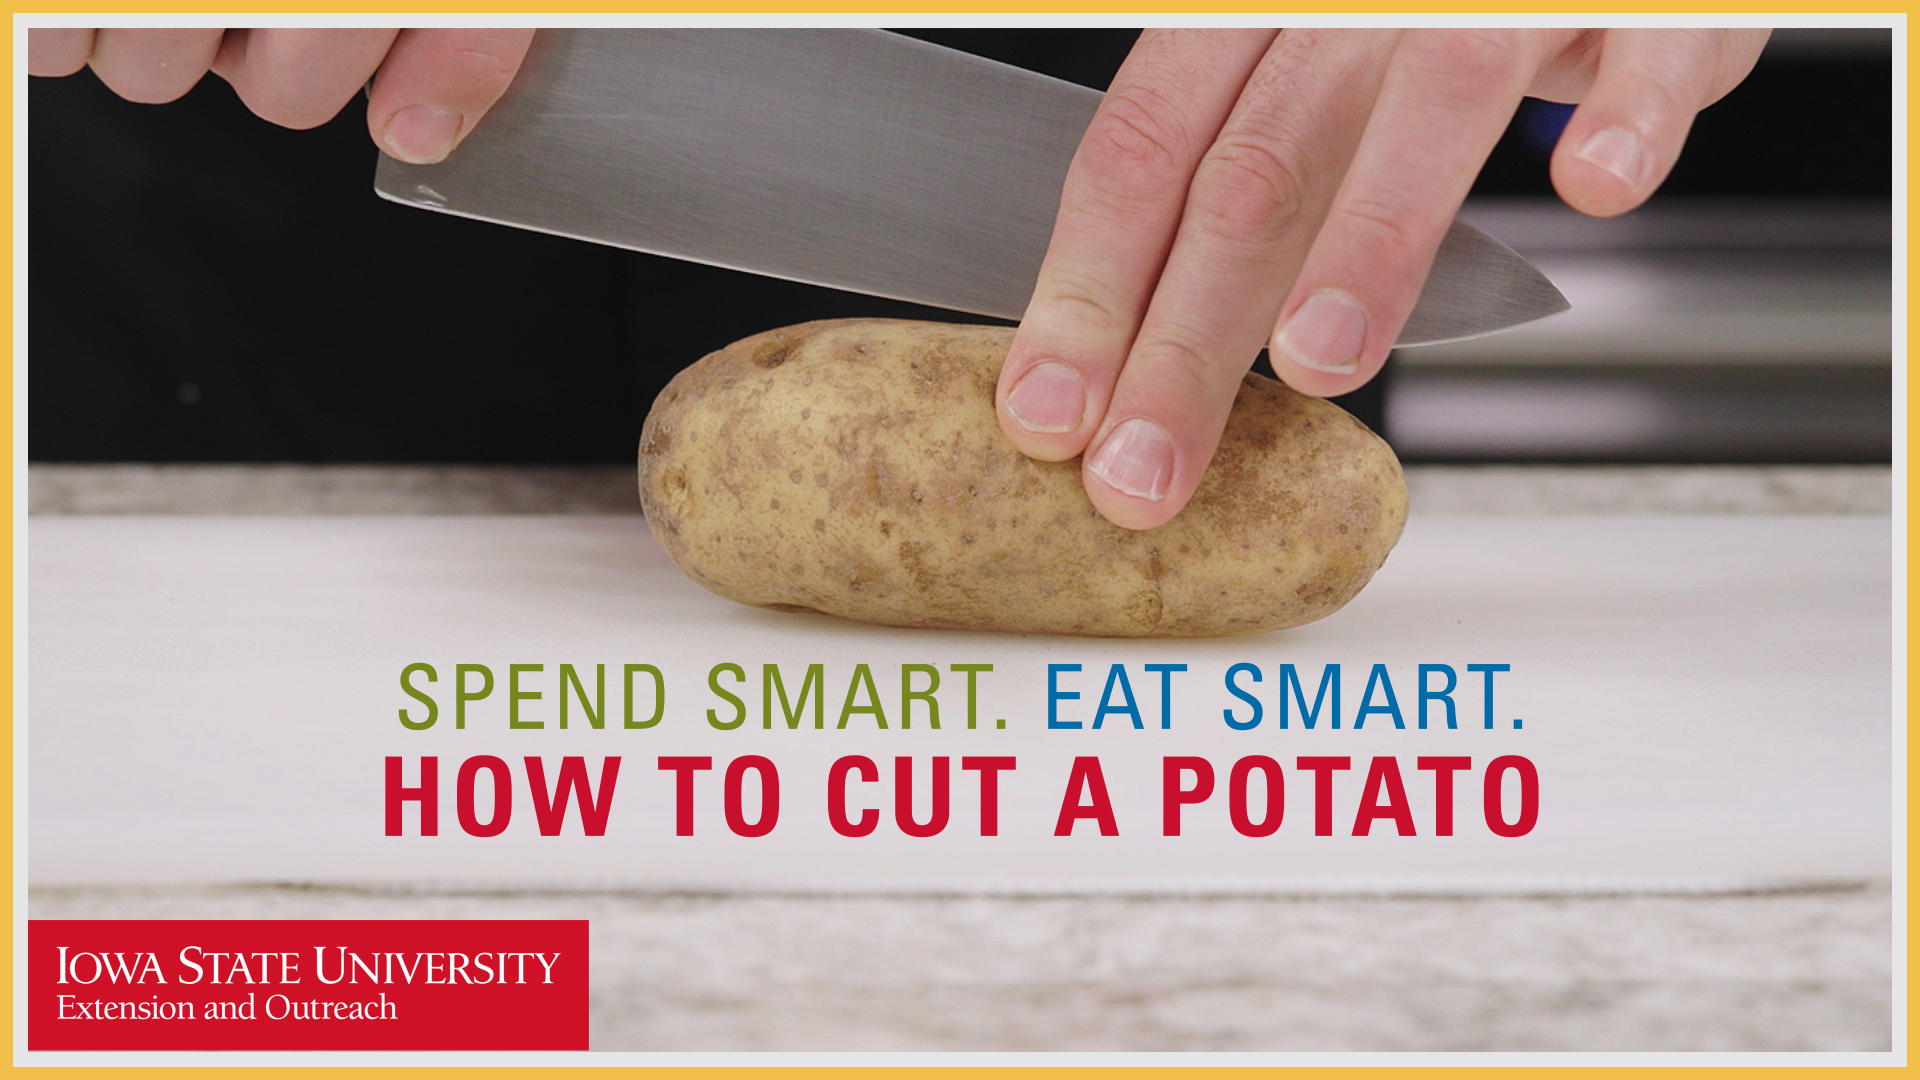 How to Cut a Potato